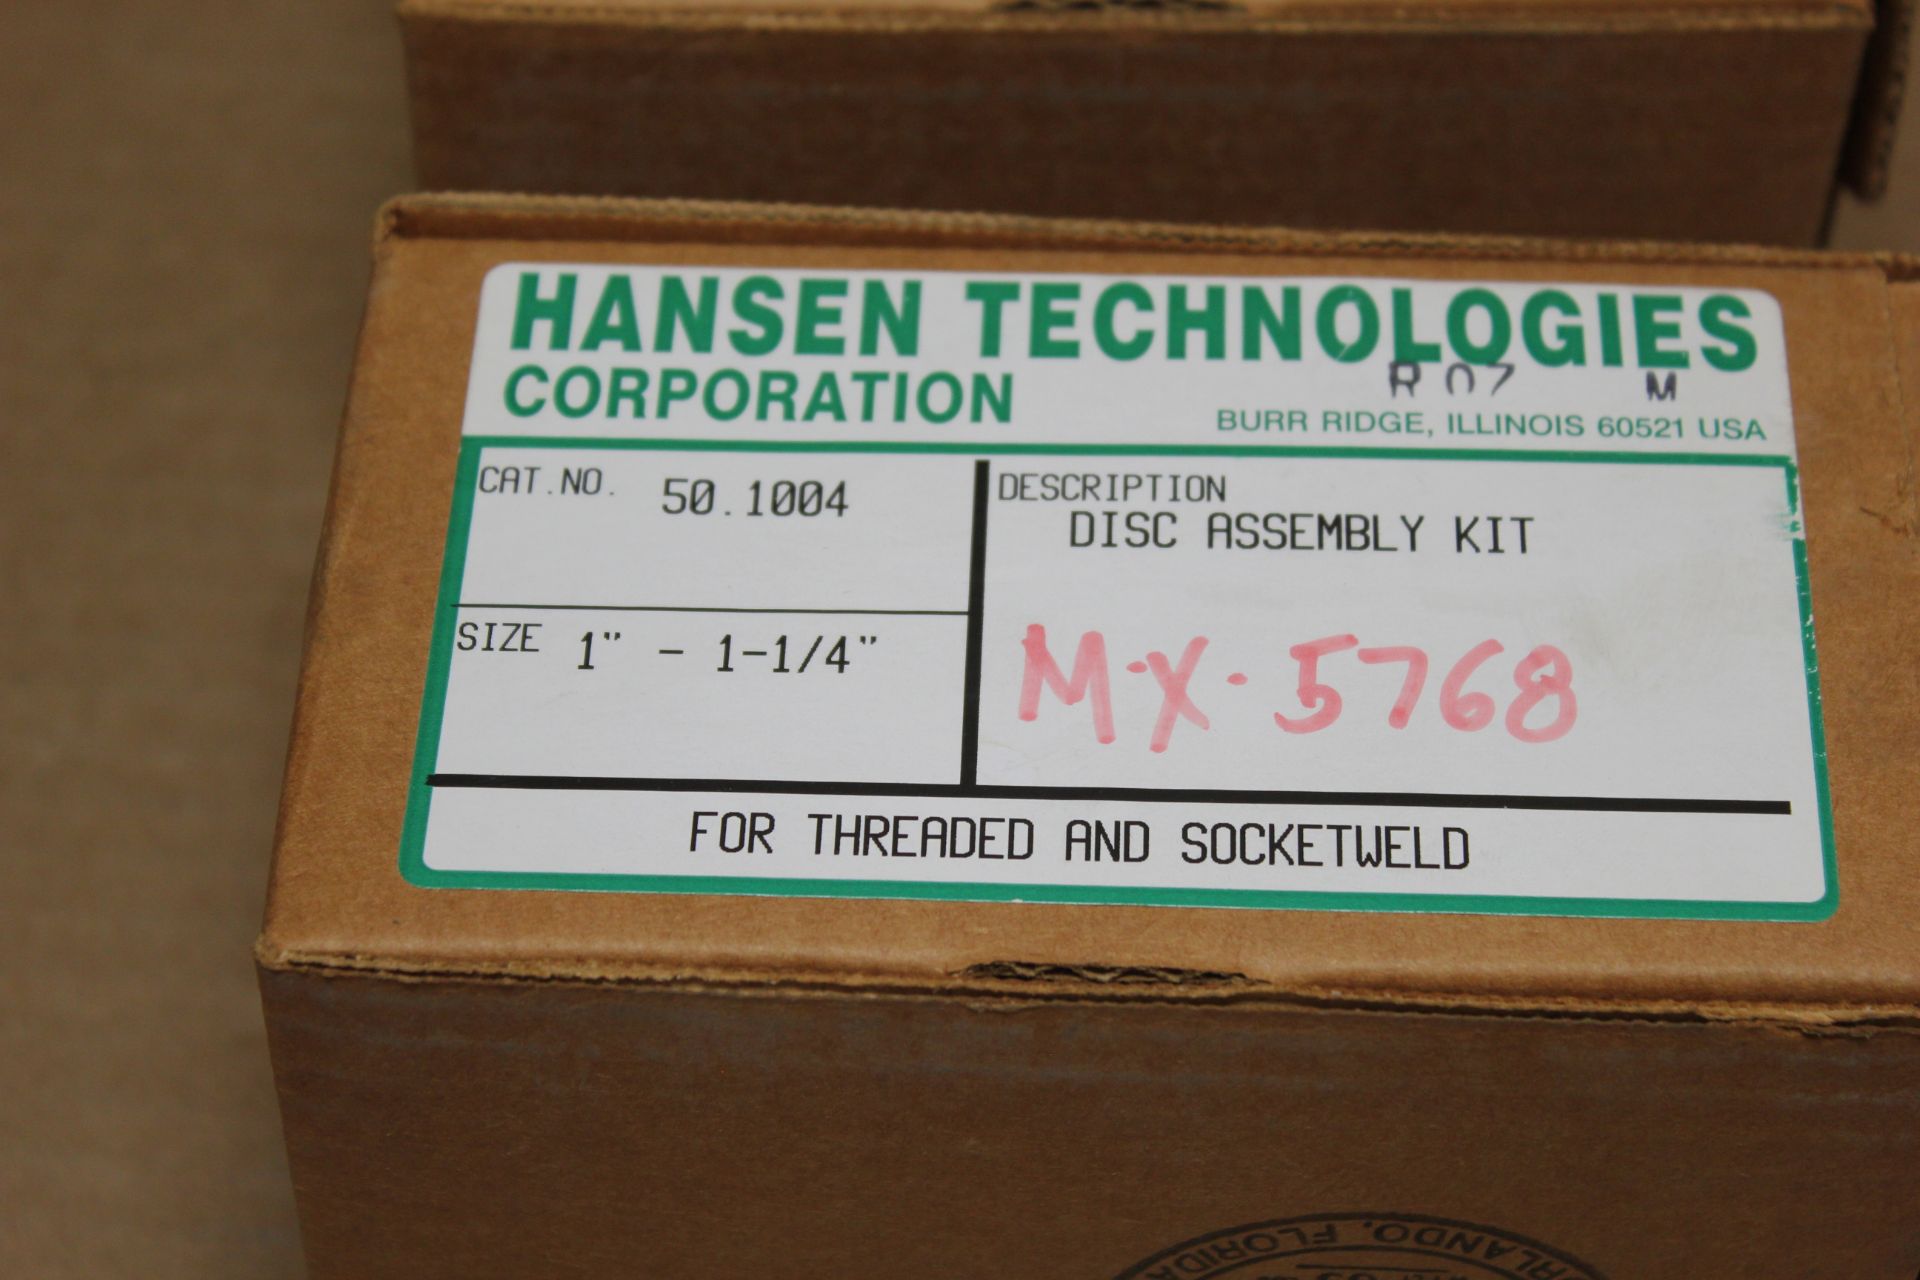 LOT OF 2 NEW HANSEN TECHNOLOGIES DISC ASSEMBLY KIT - Image 2 of 2